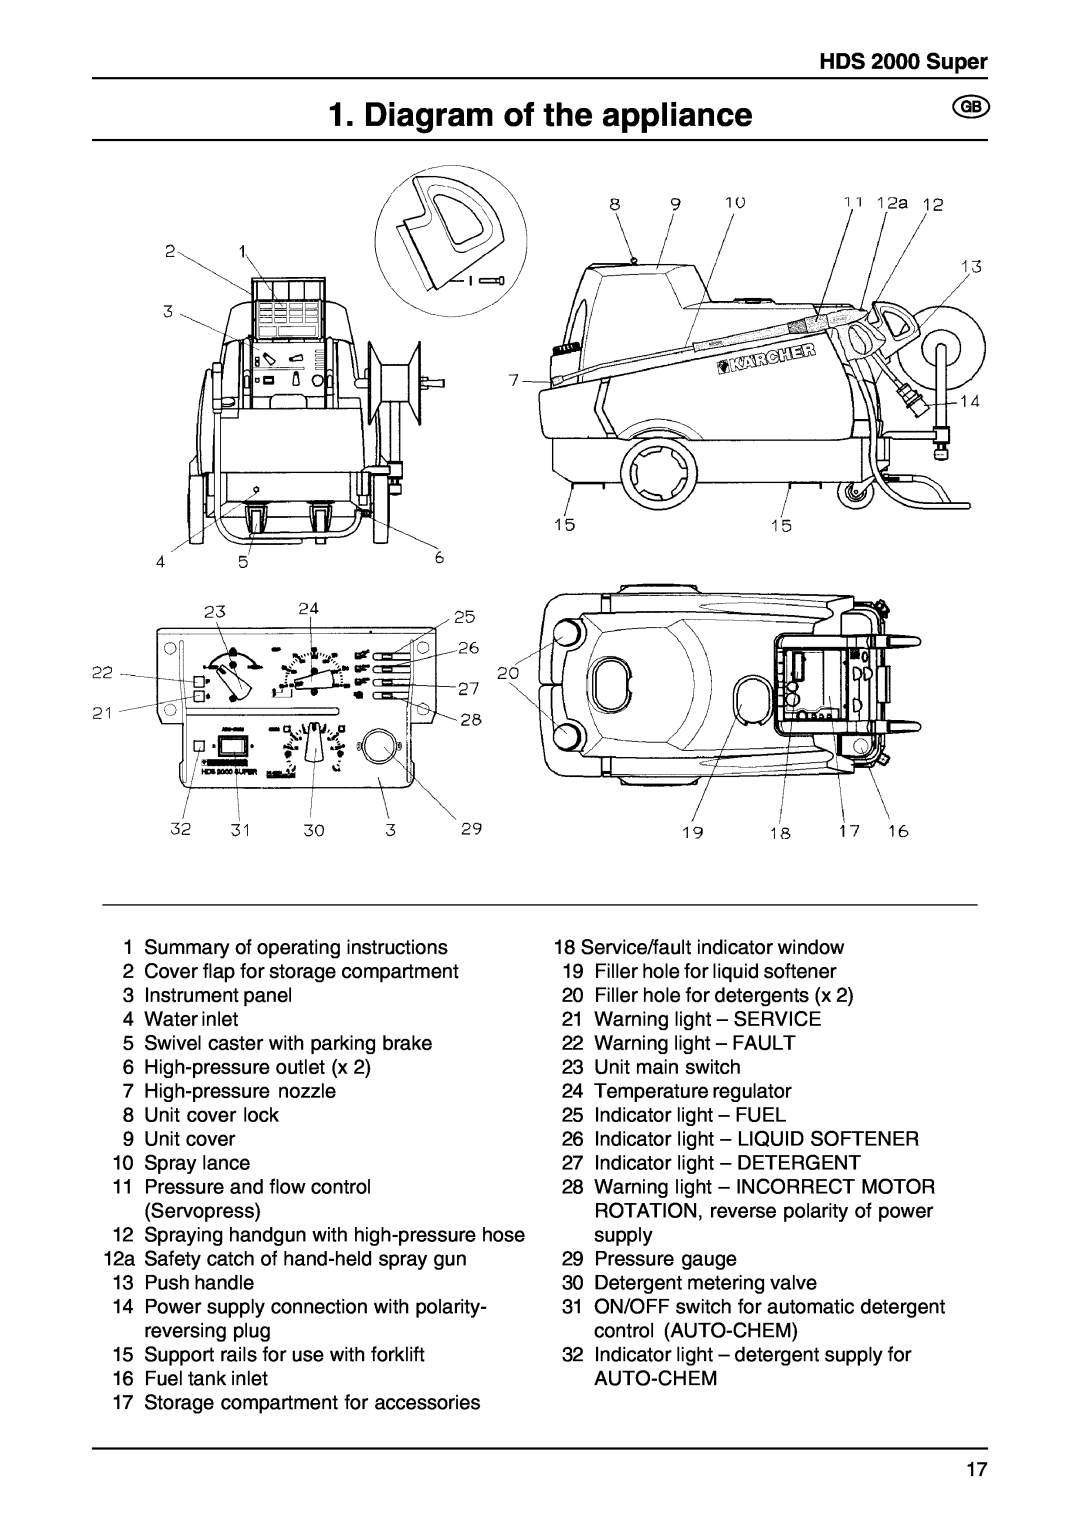 Karcher manual Diagram of the appliance, HDS 2000 Super 